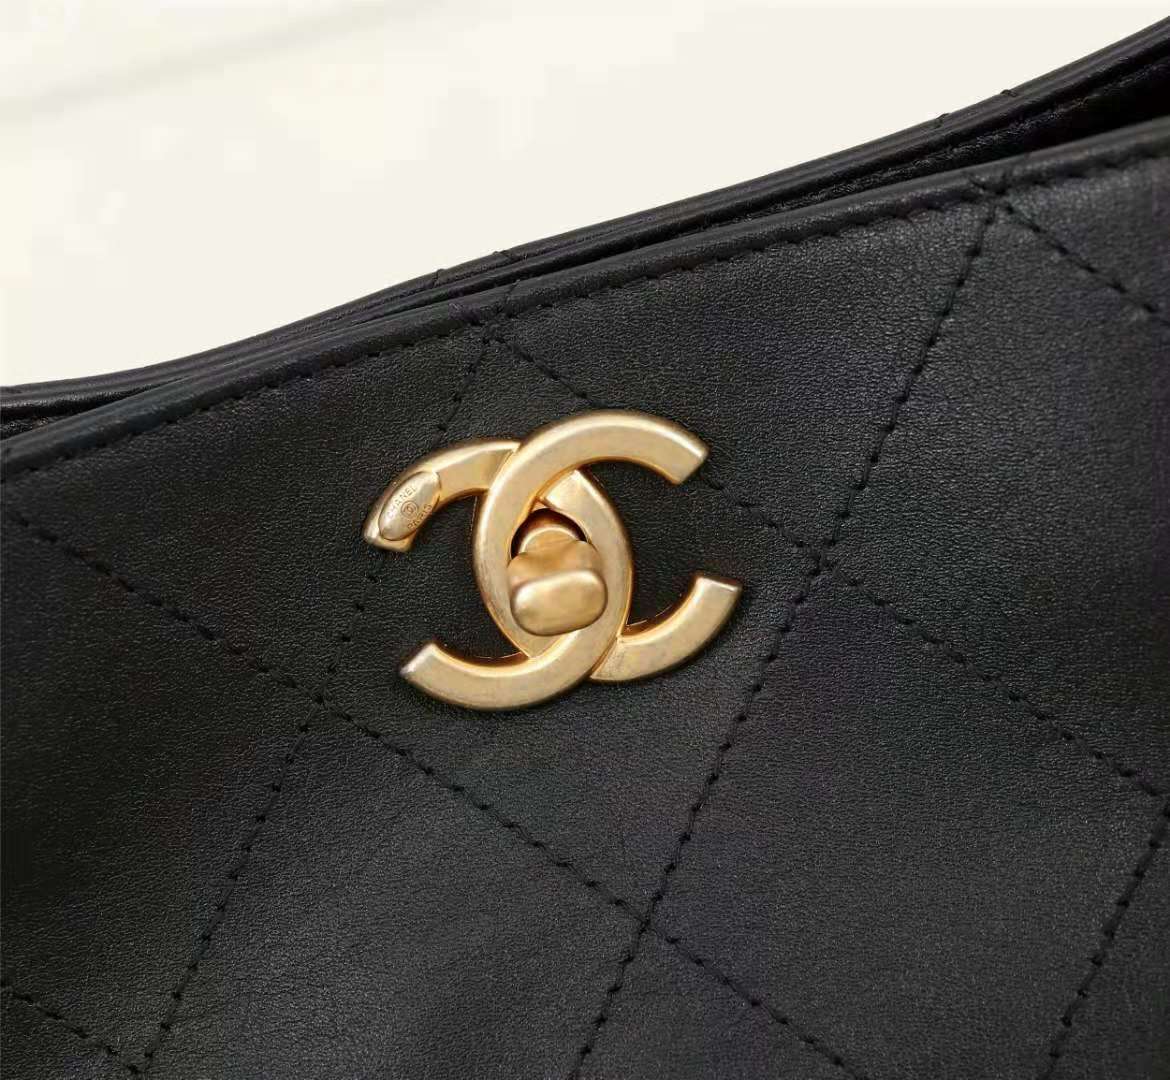 Chanel Hobo Handbag Black & Red 2018 autumn & winter NEW - Click Image to Close